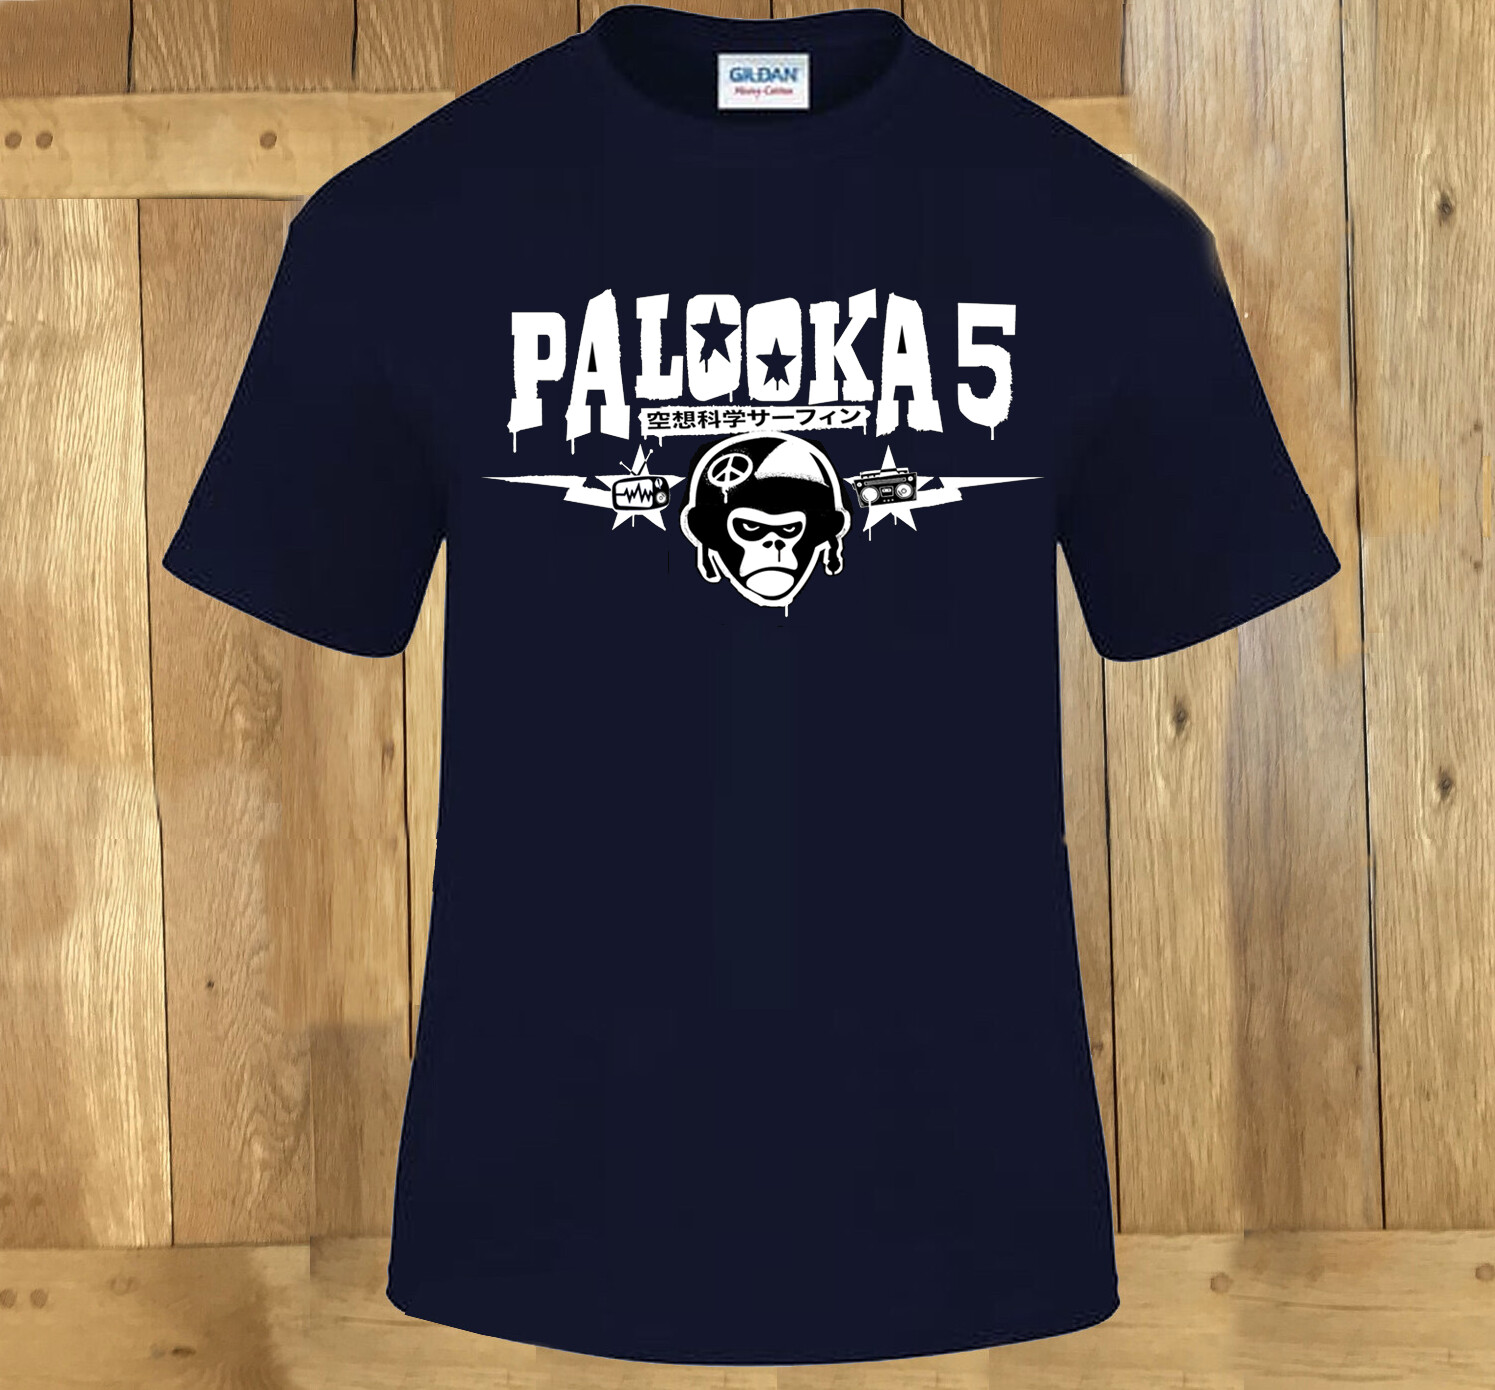 NEW Palooka 5 TShirt BLACK XXLarge